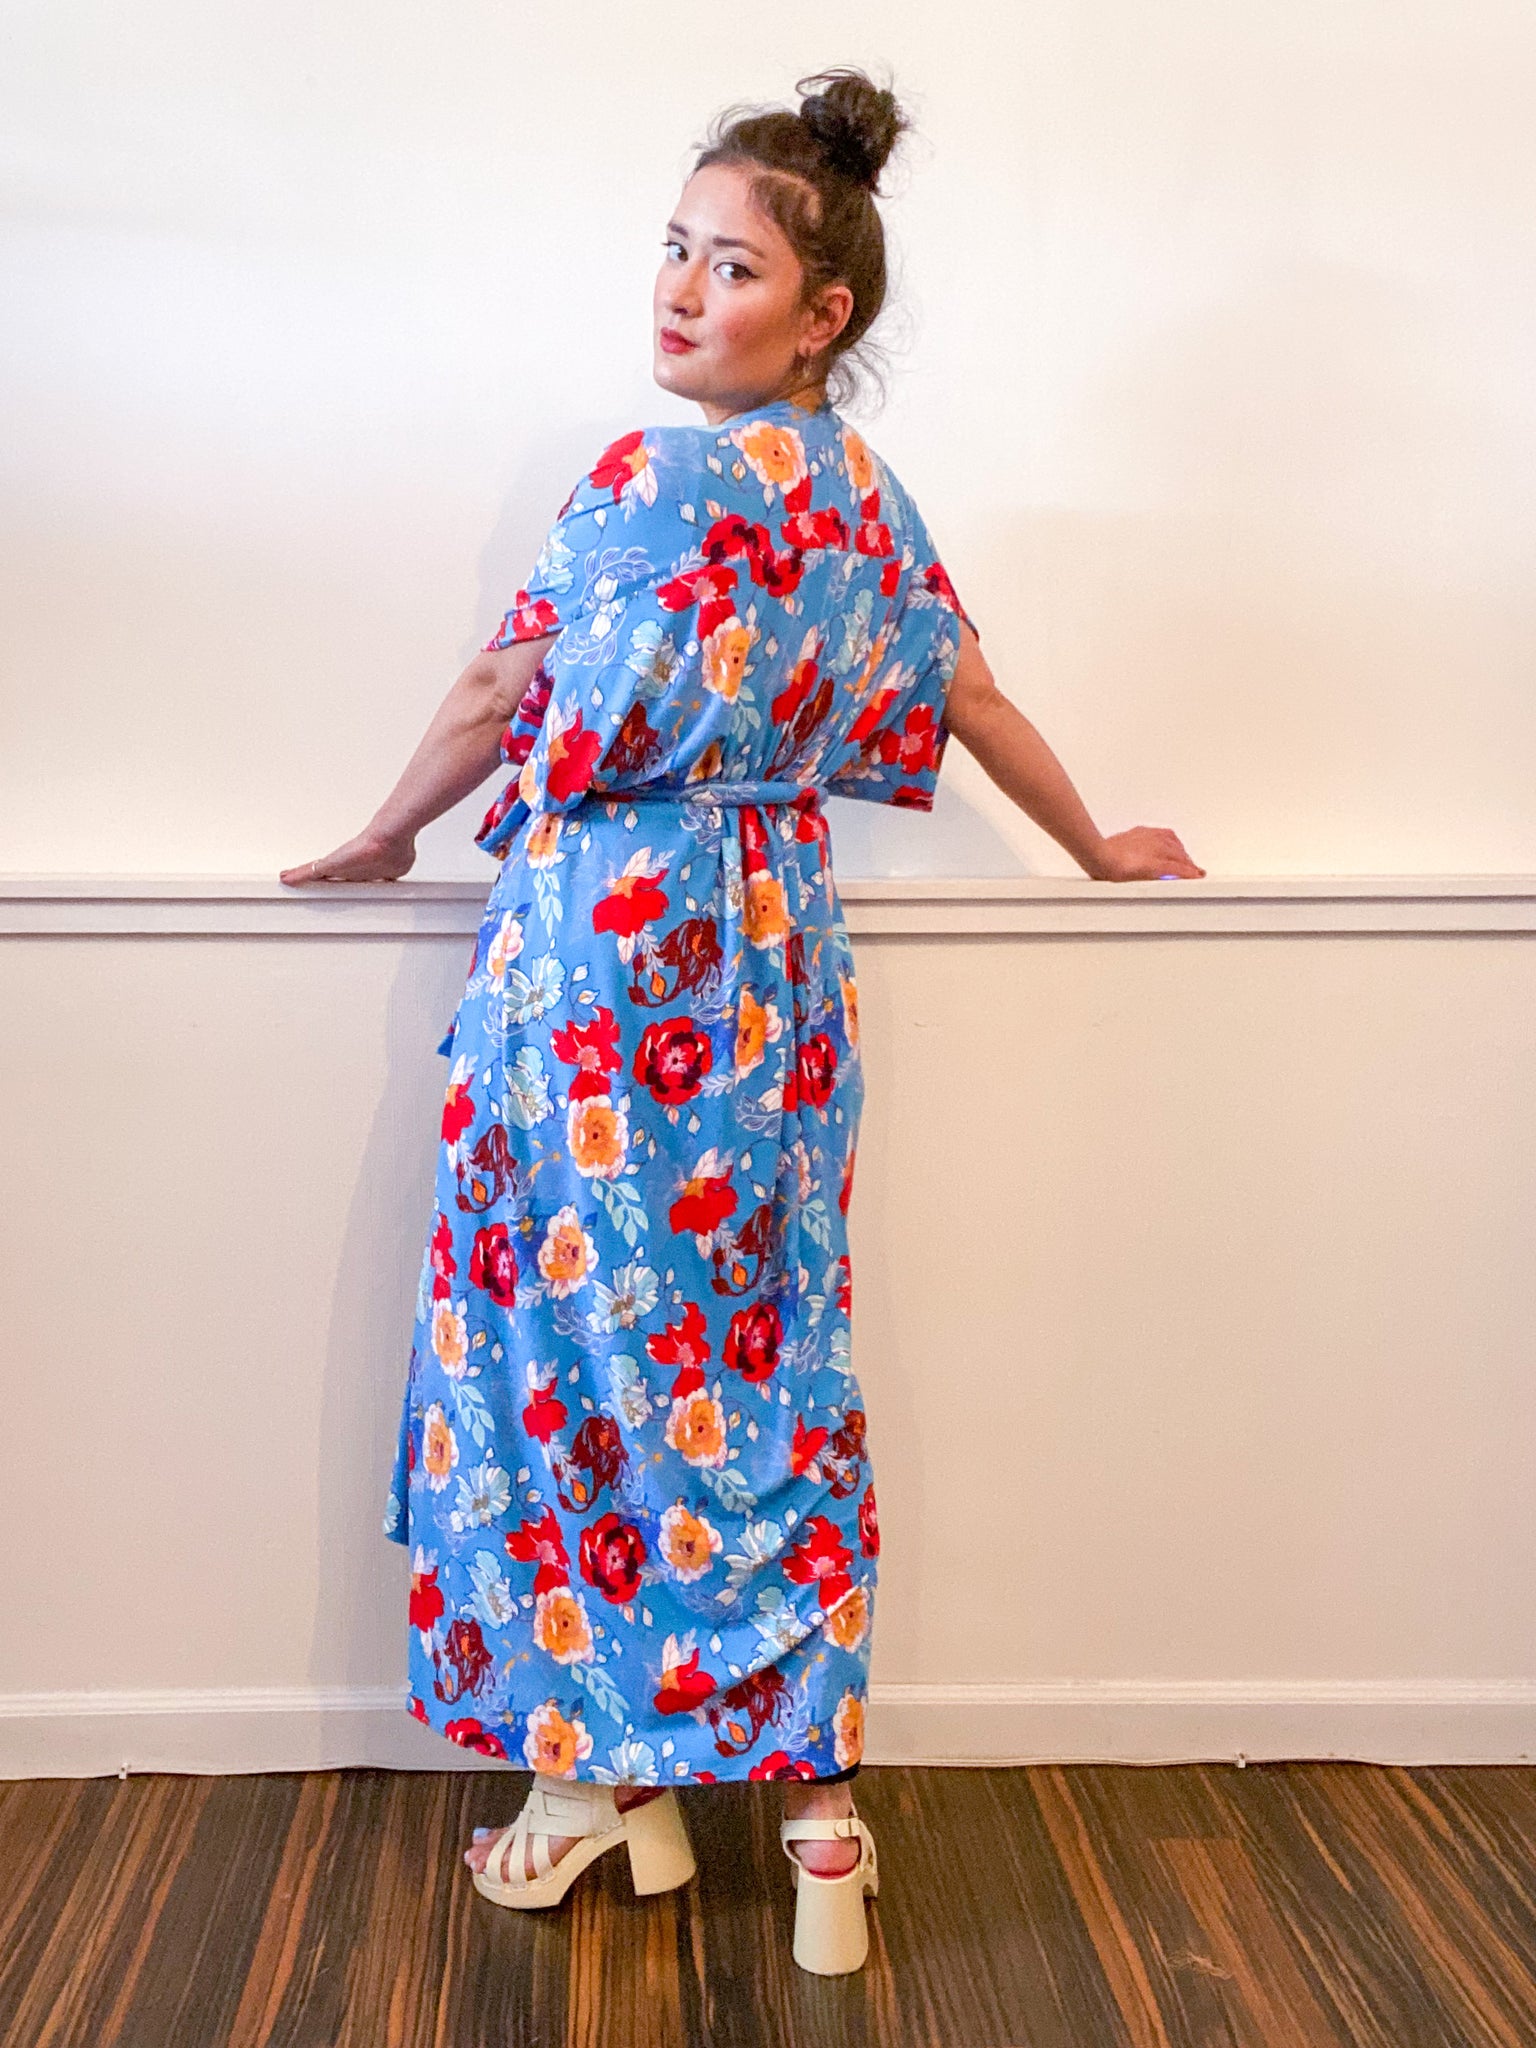 Print High Low Kimono Turquoise Floral Knit